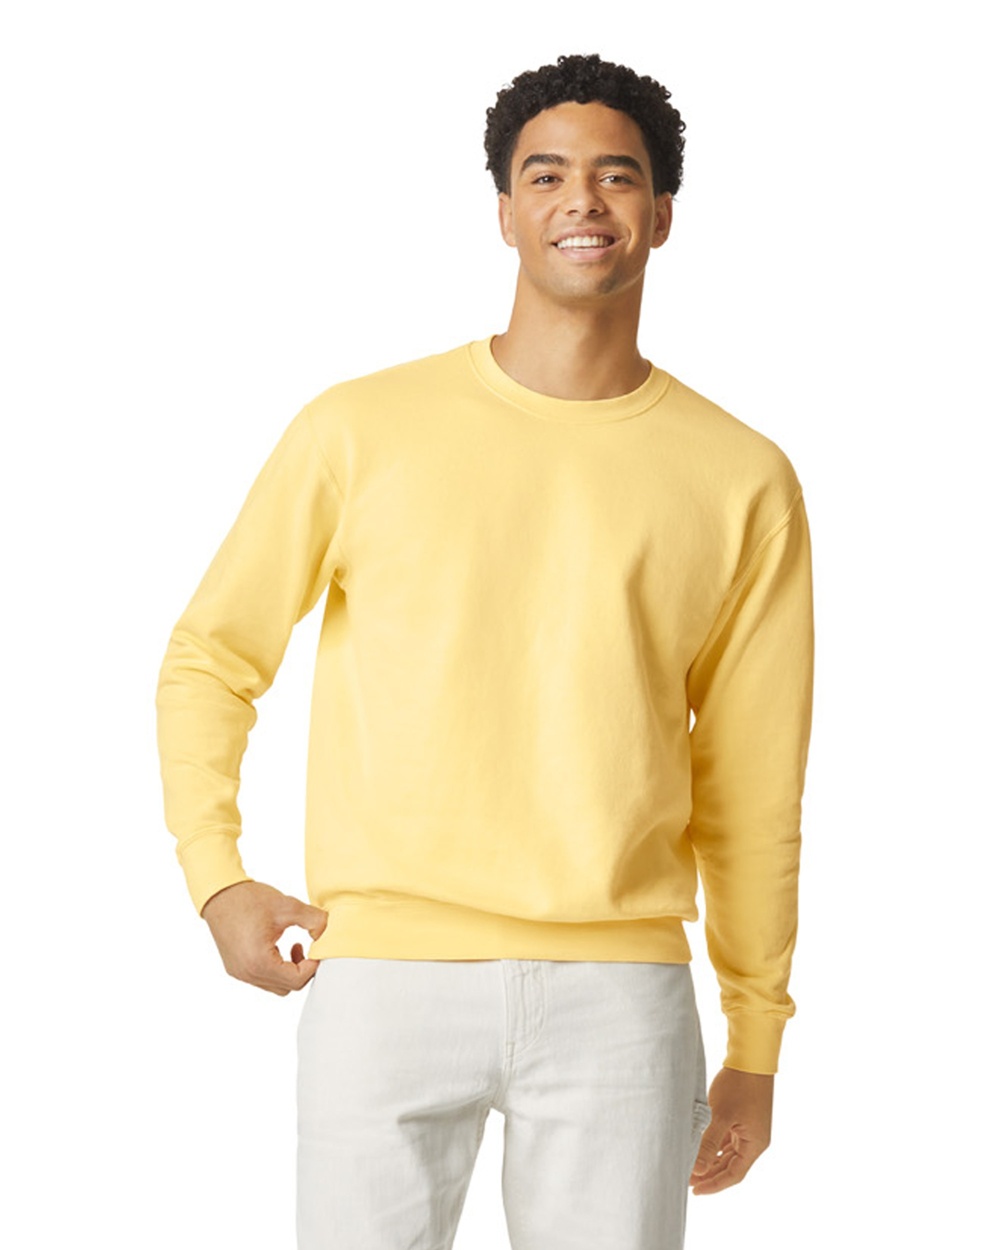 Comfort Colors® 1467 Lightweight Adult Hooded Sweatshirt